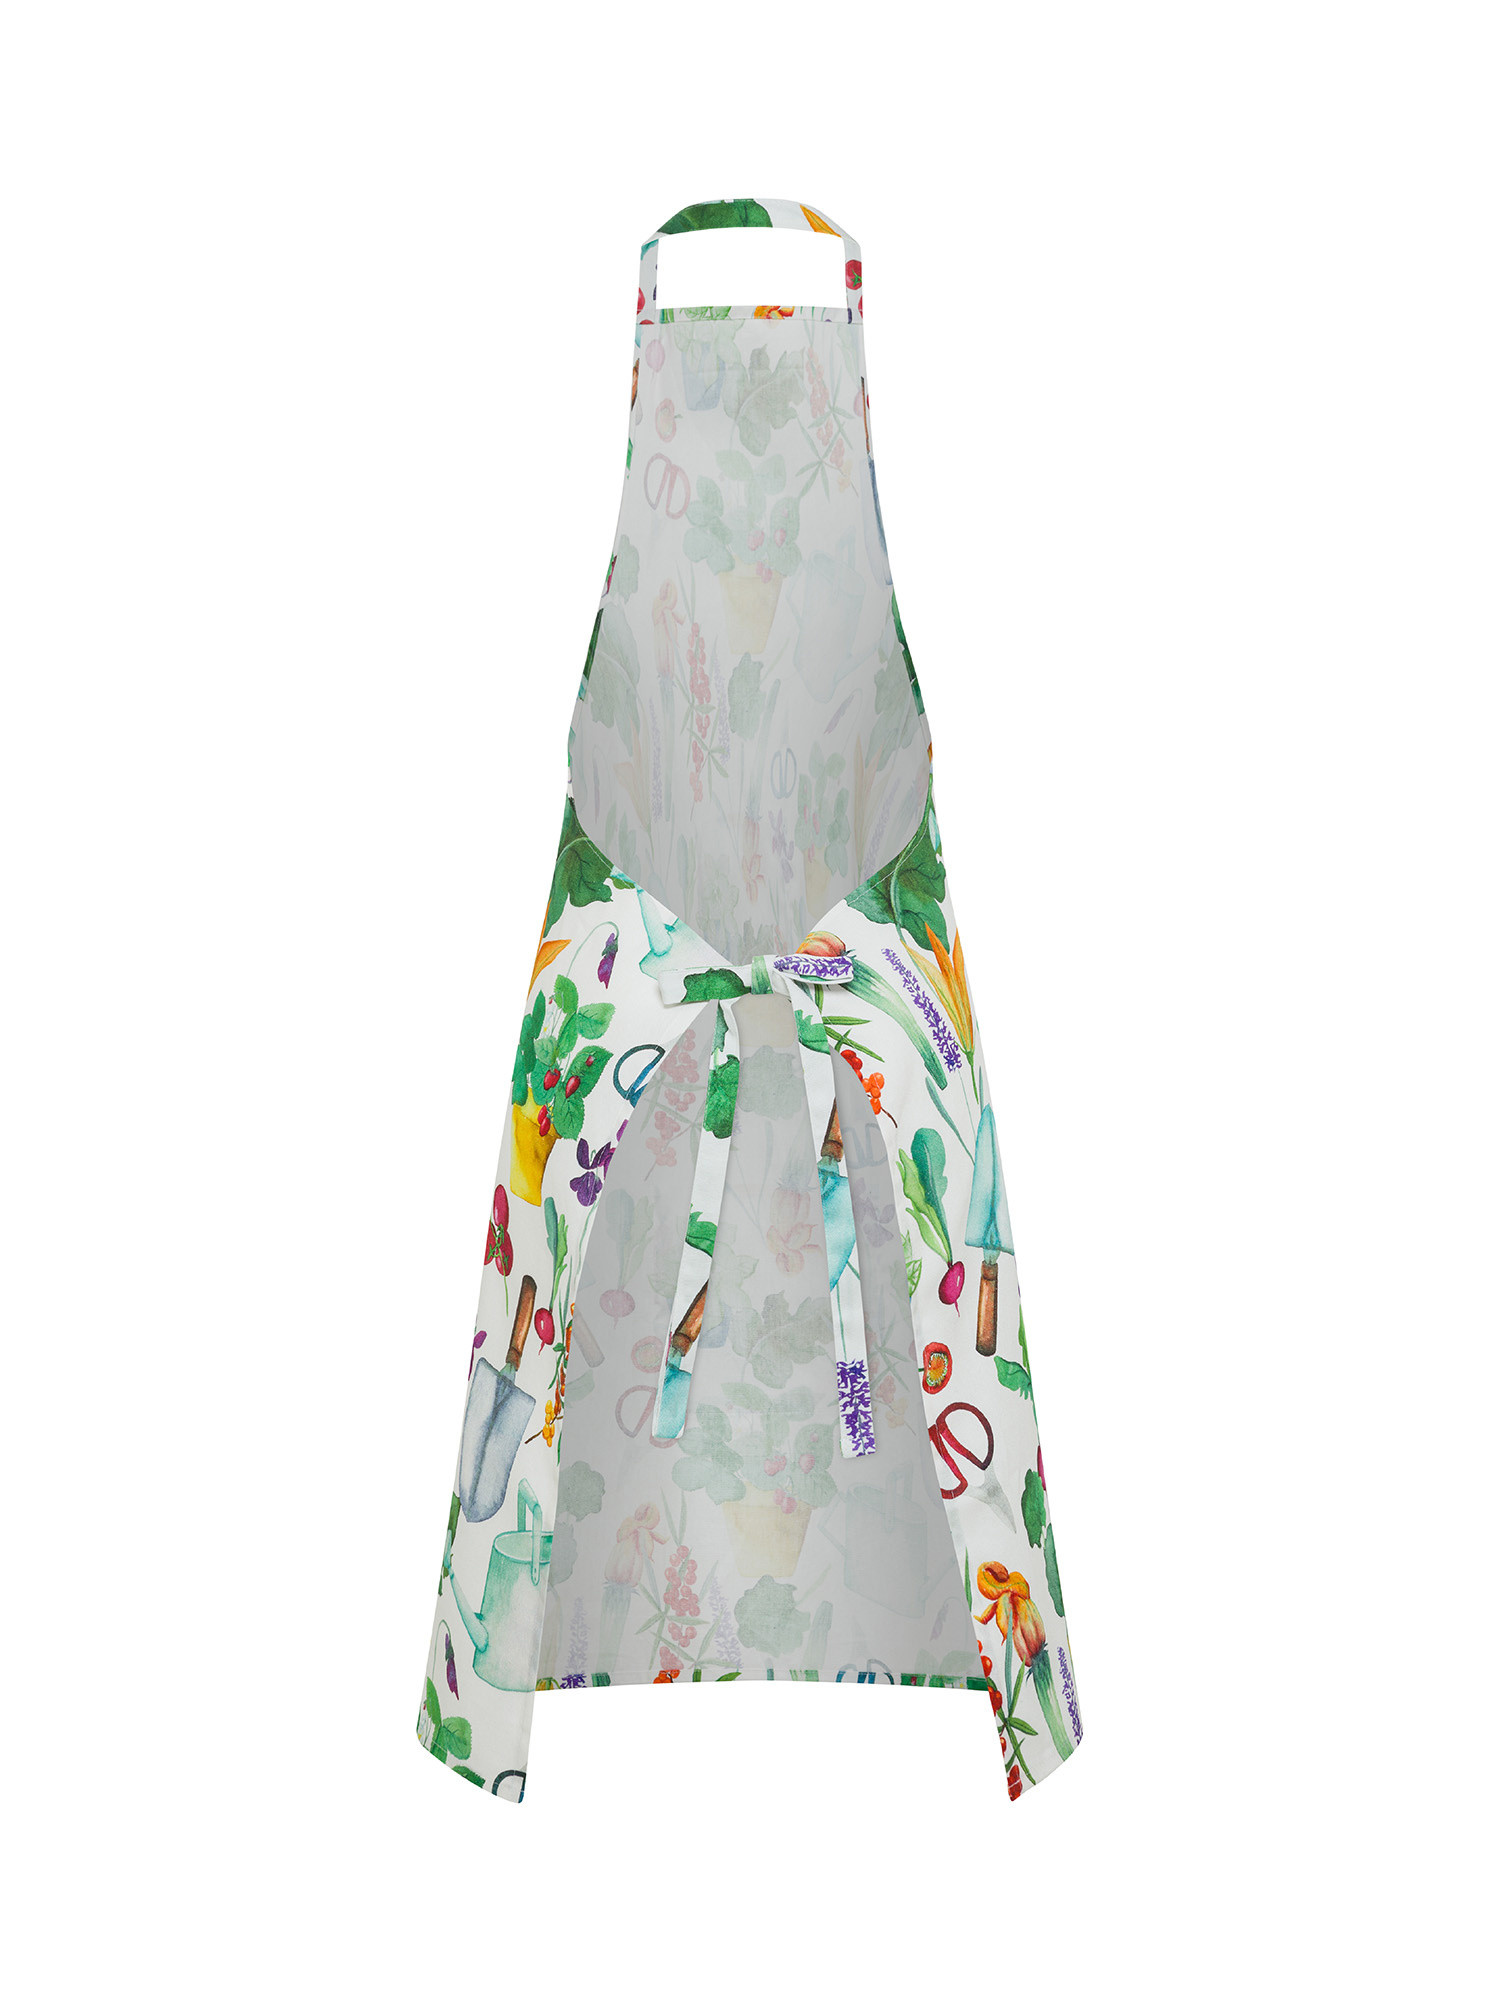 Grembiule da cucina panama di cotone stampa vegetale, Multicolor, large image number 1